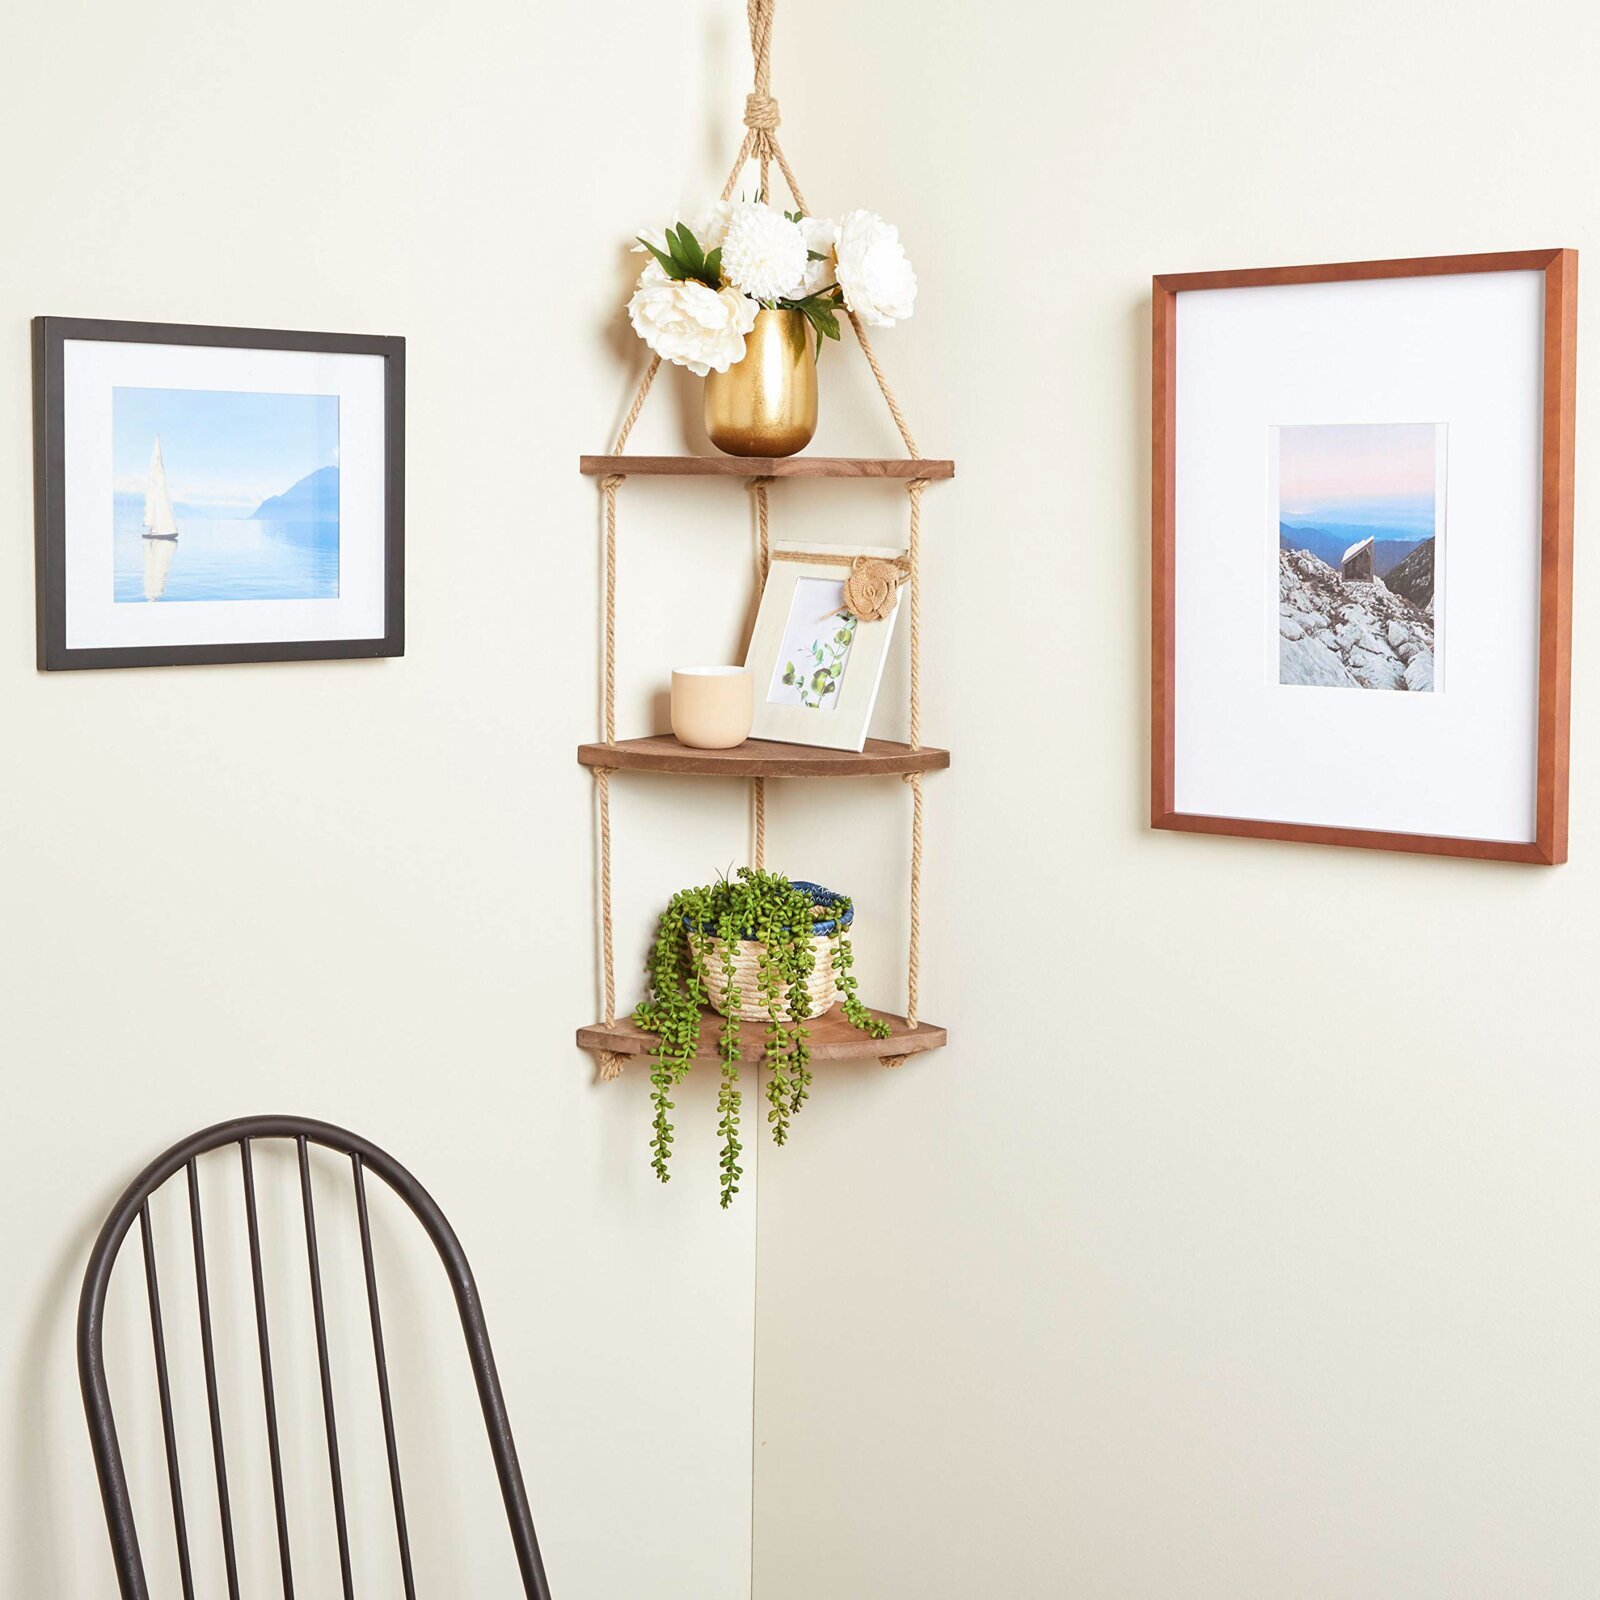 Hanging corner shelf with rope